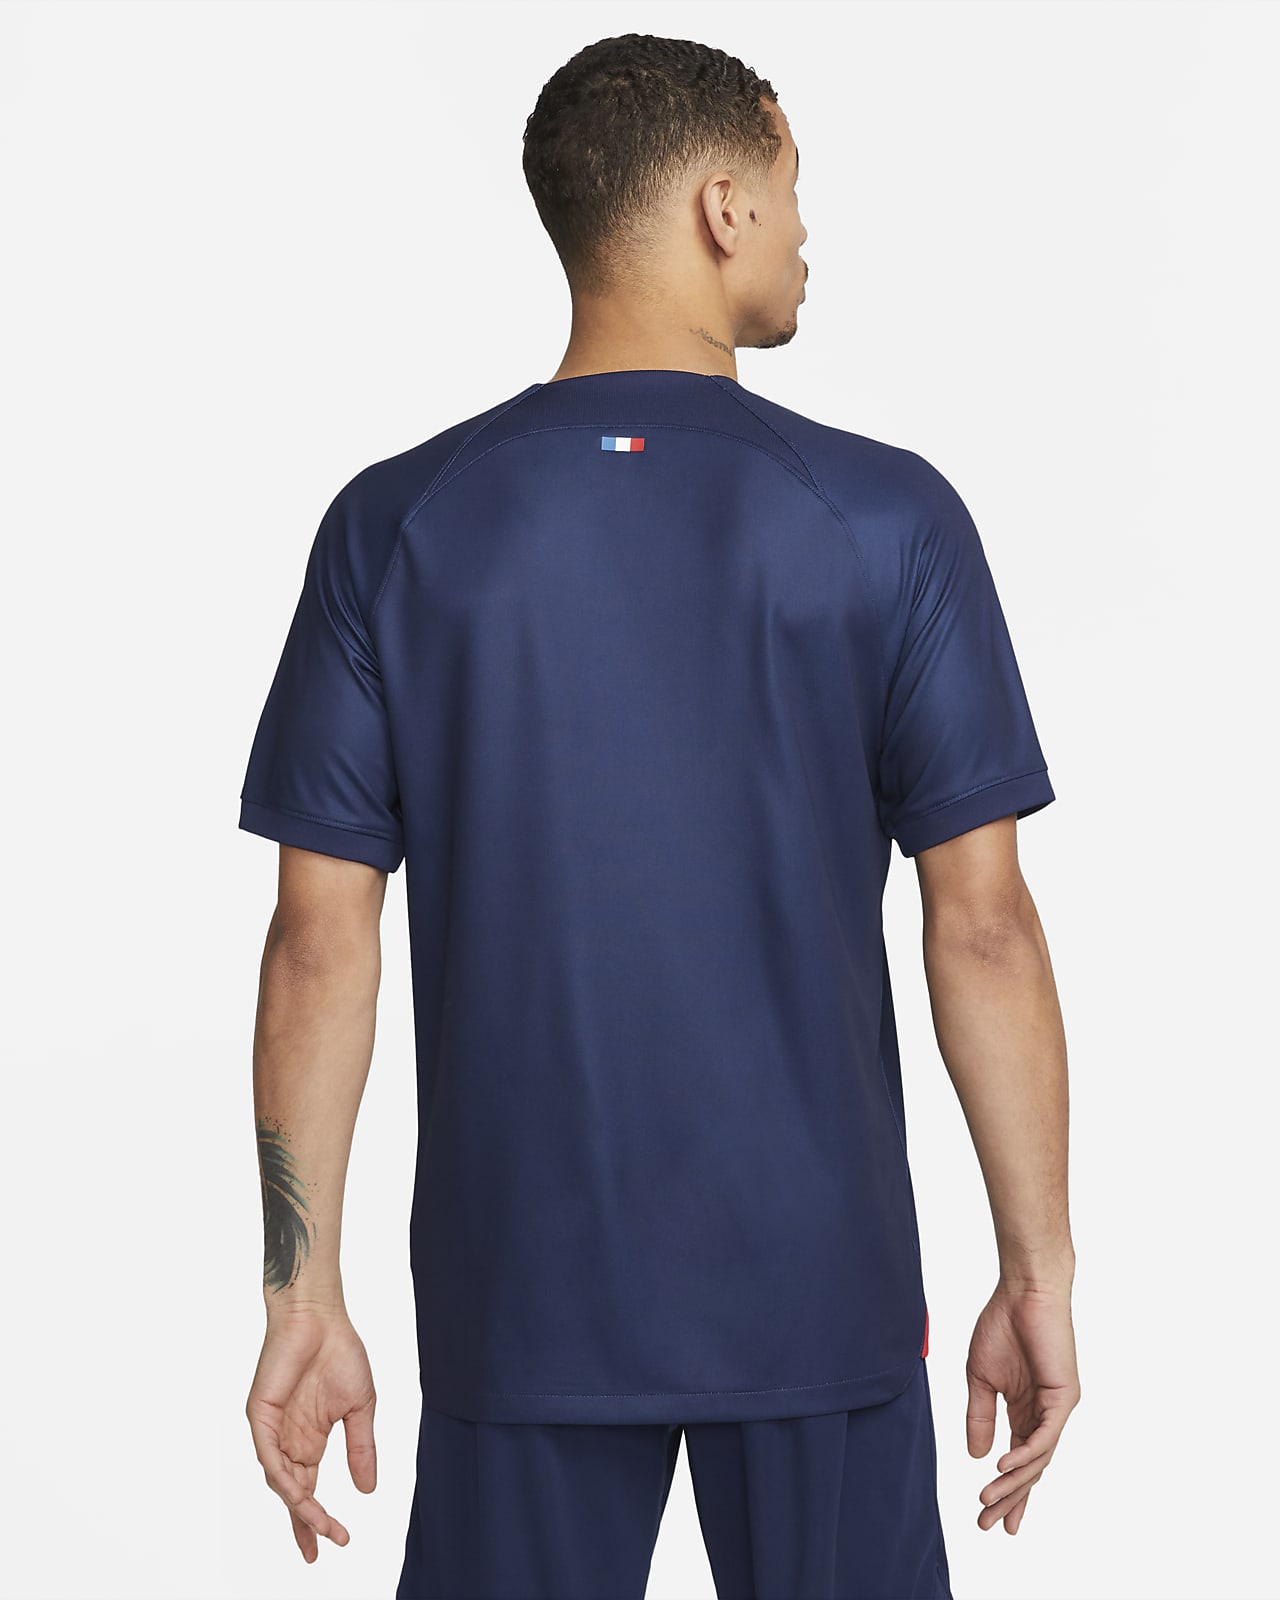 Nike Psg - Bleu Marine - Maillot Homme